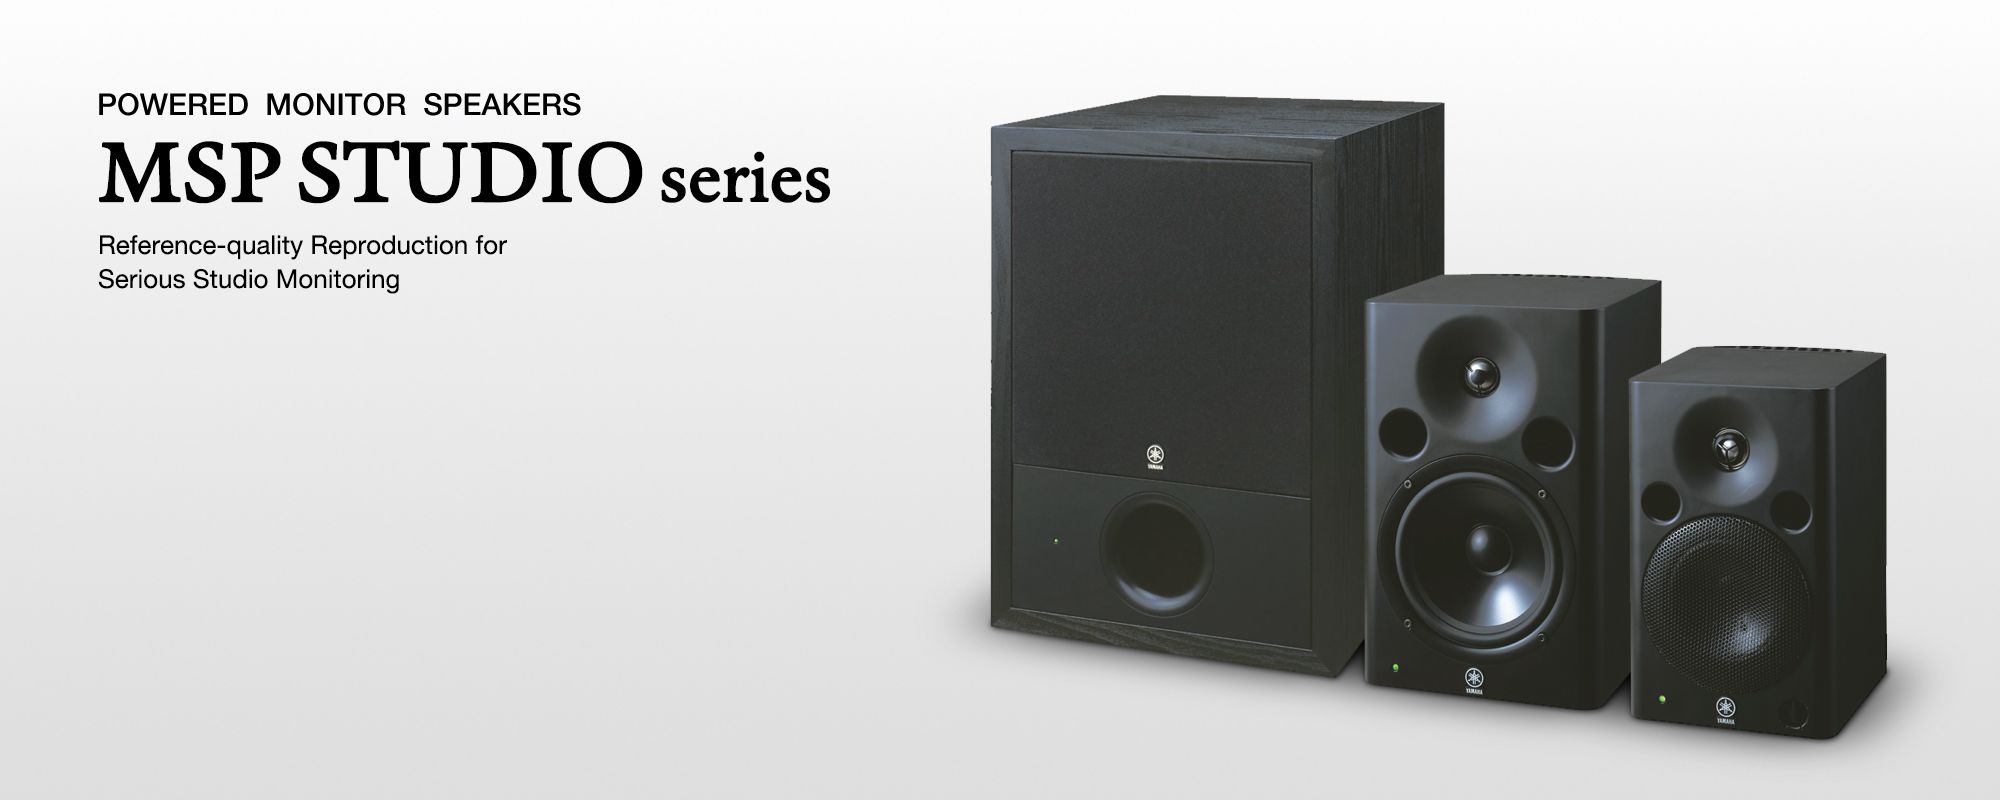 MSP STUDIO Series - Overview - Speakers - Professional Audio 